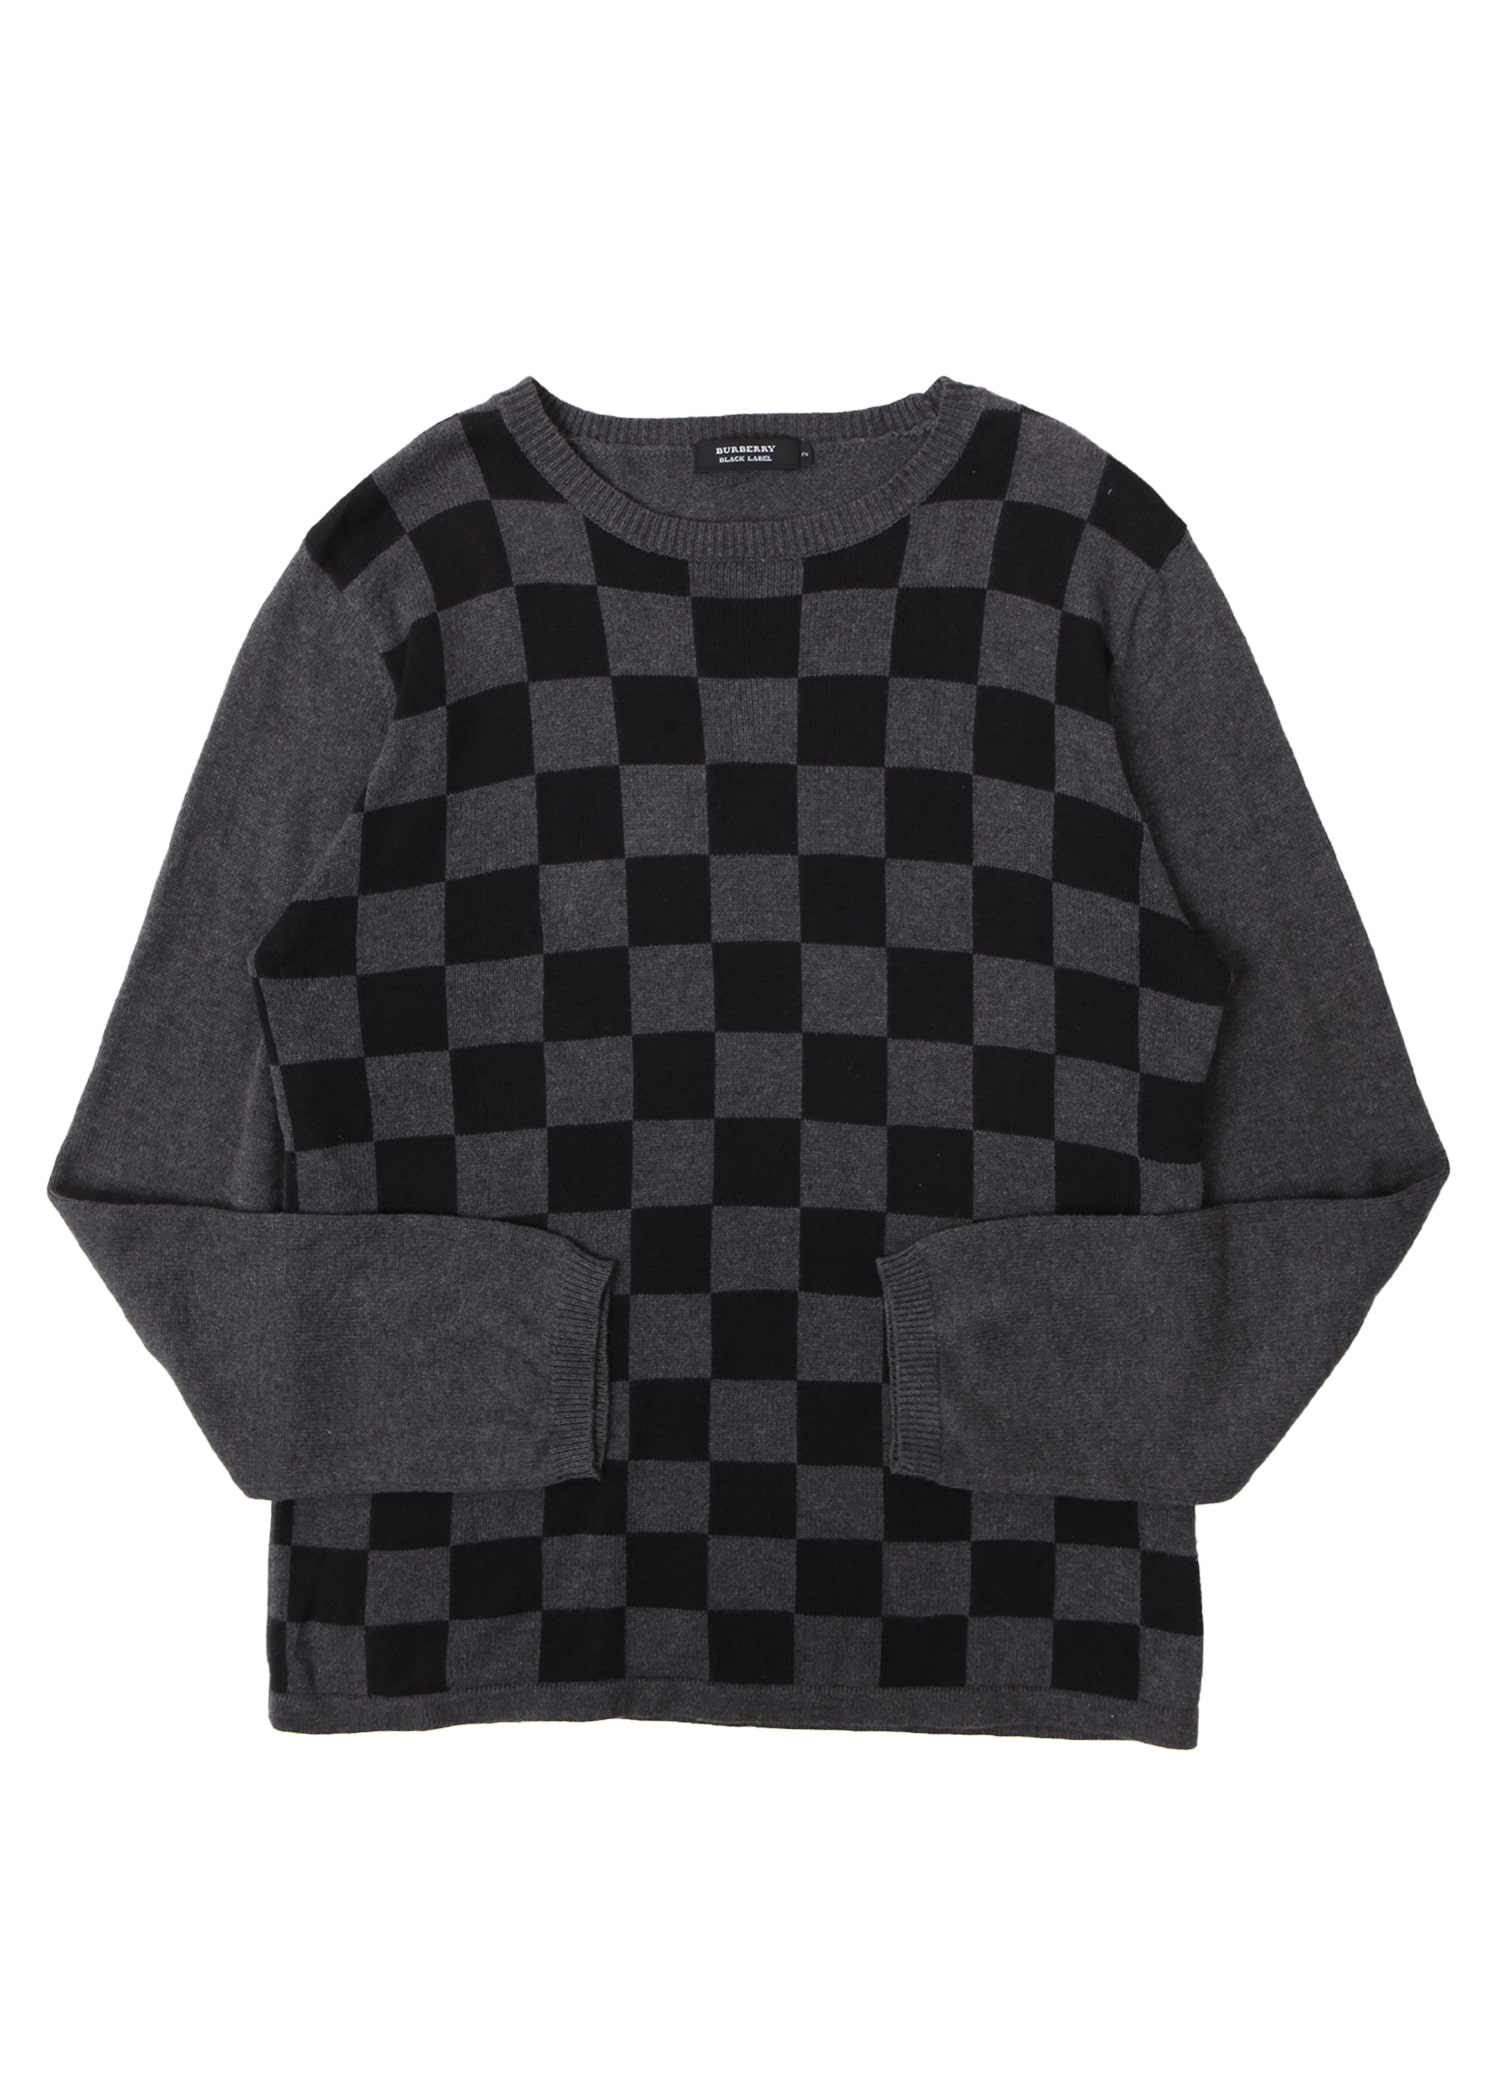 BURBERRY black label checker knit